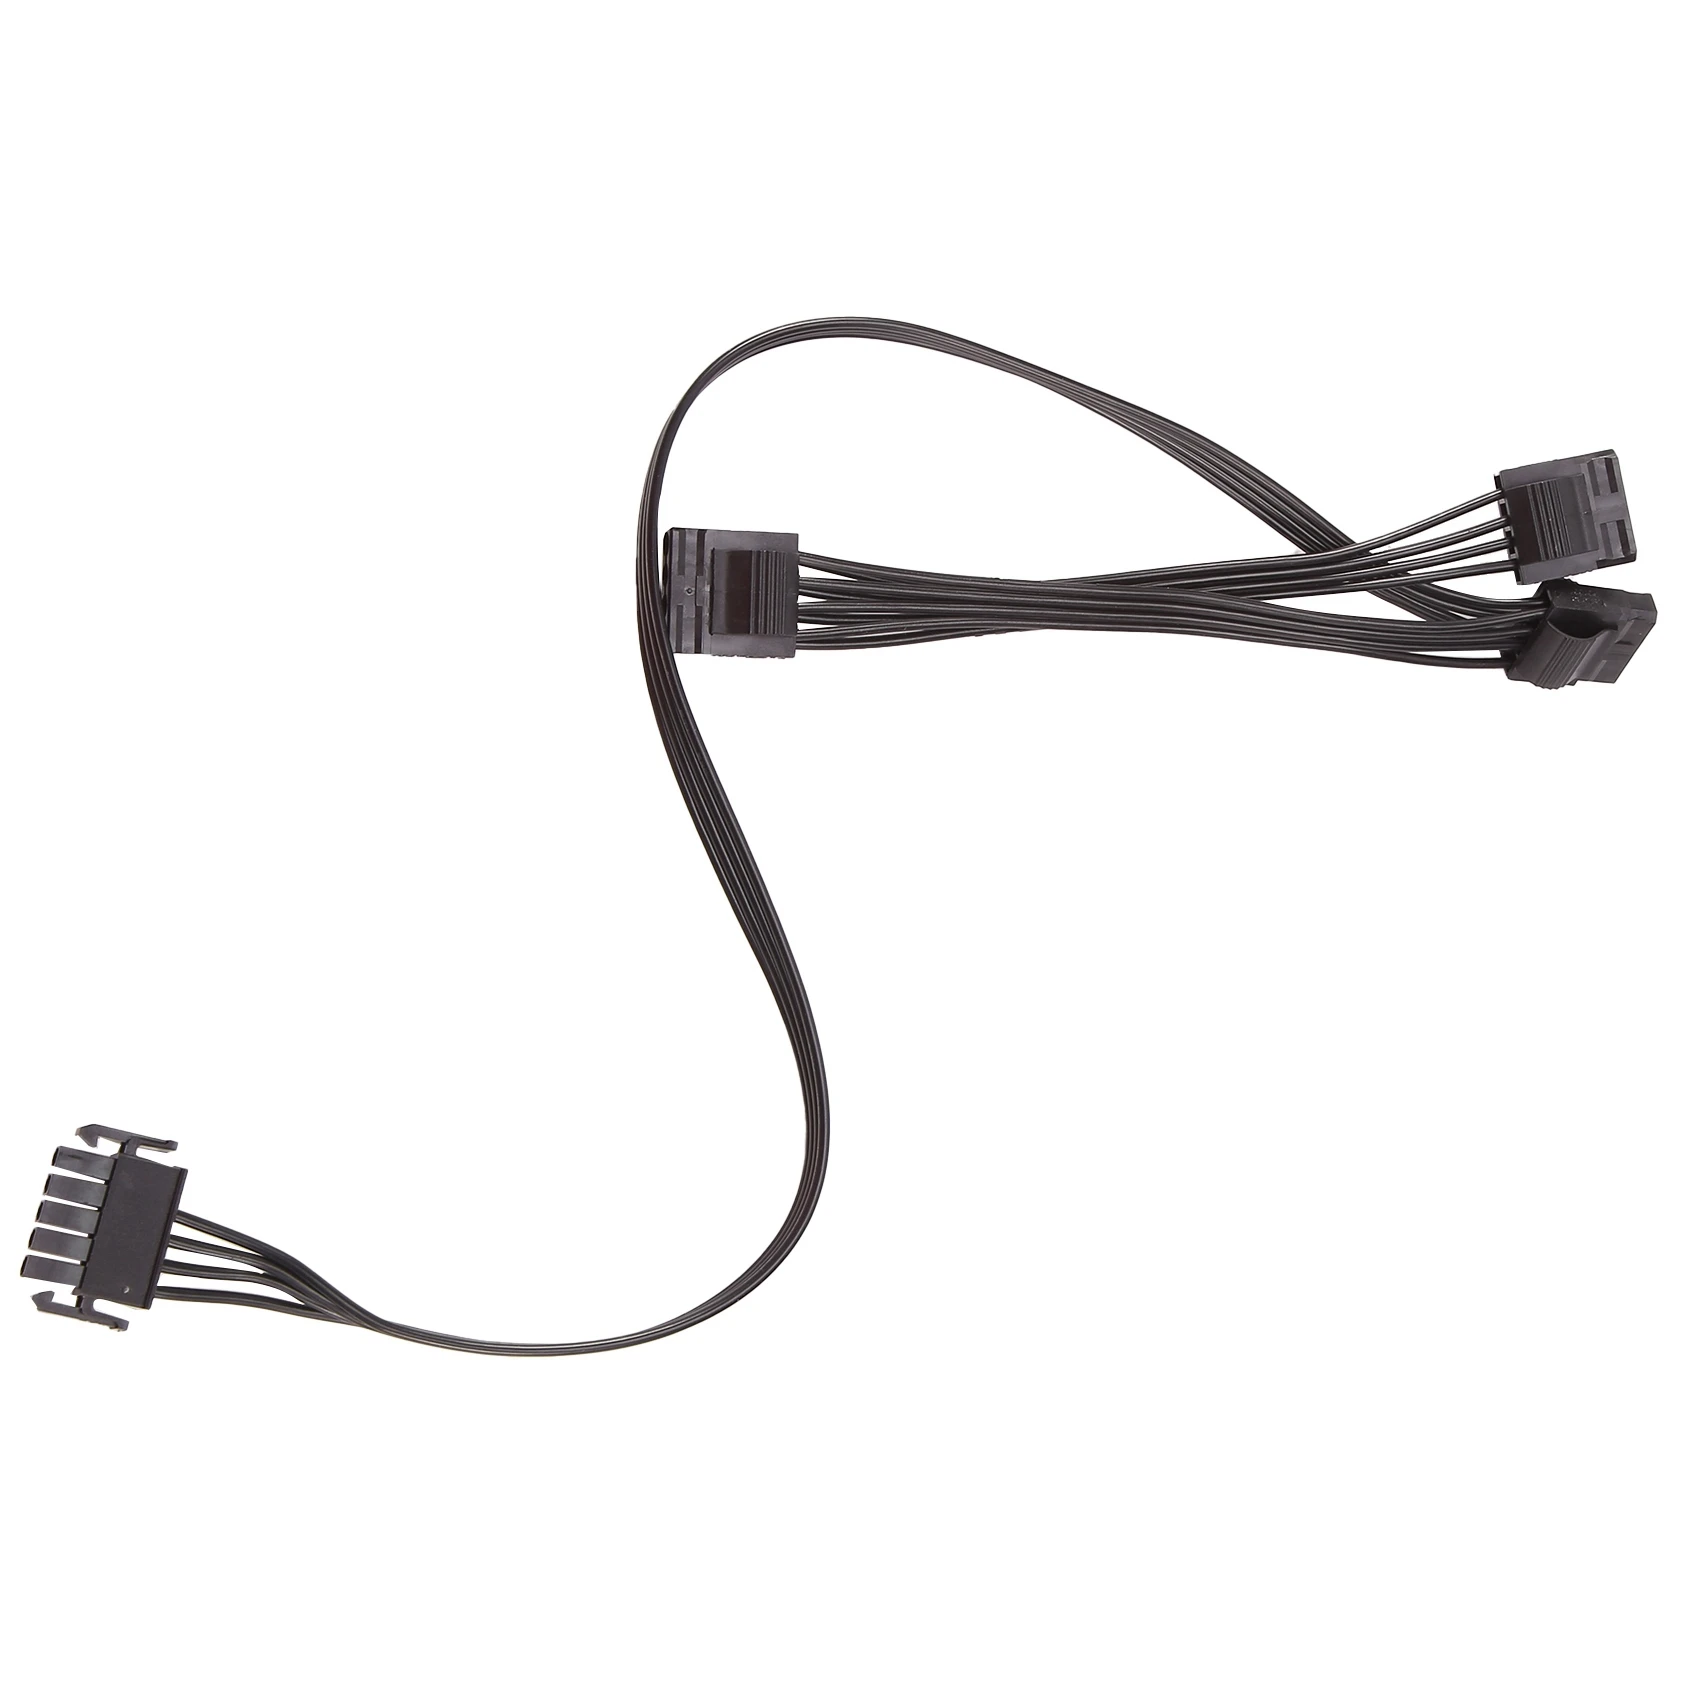 5Pin 1 to 3 Port Peripheral 4Pin Molex IDE 5P PSU Power Supply Cable for Enermax Modular PSU